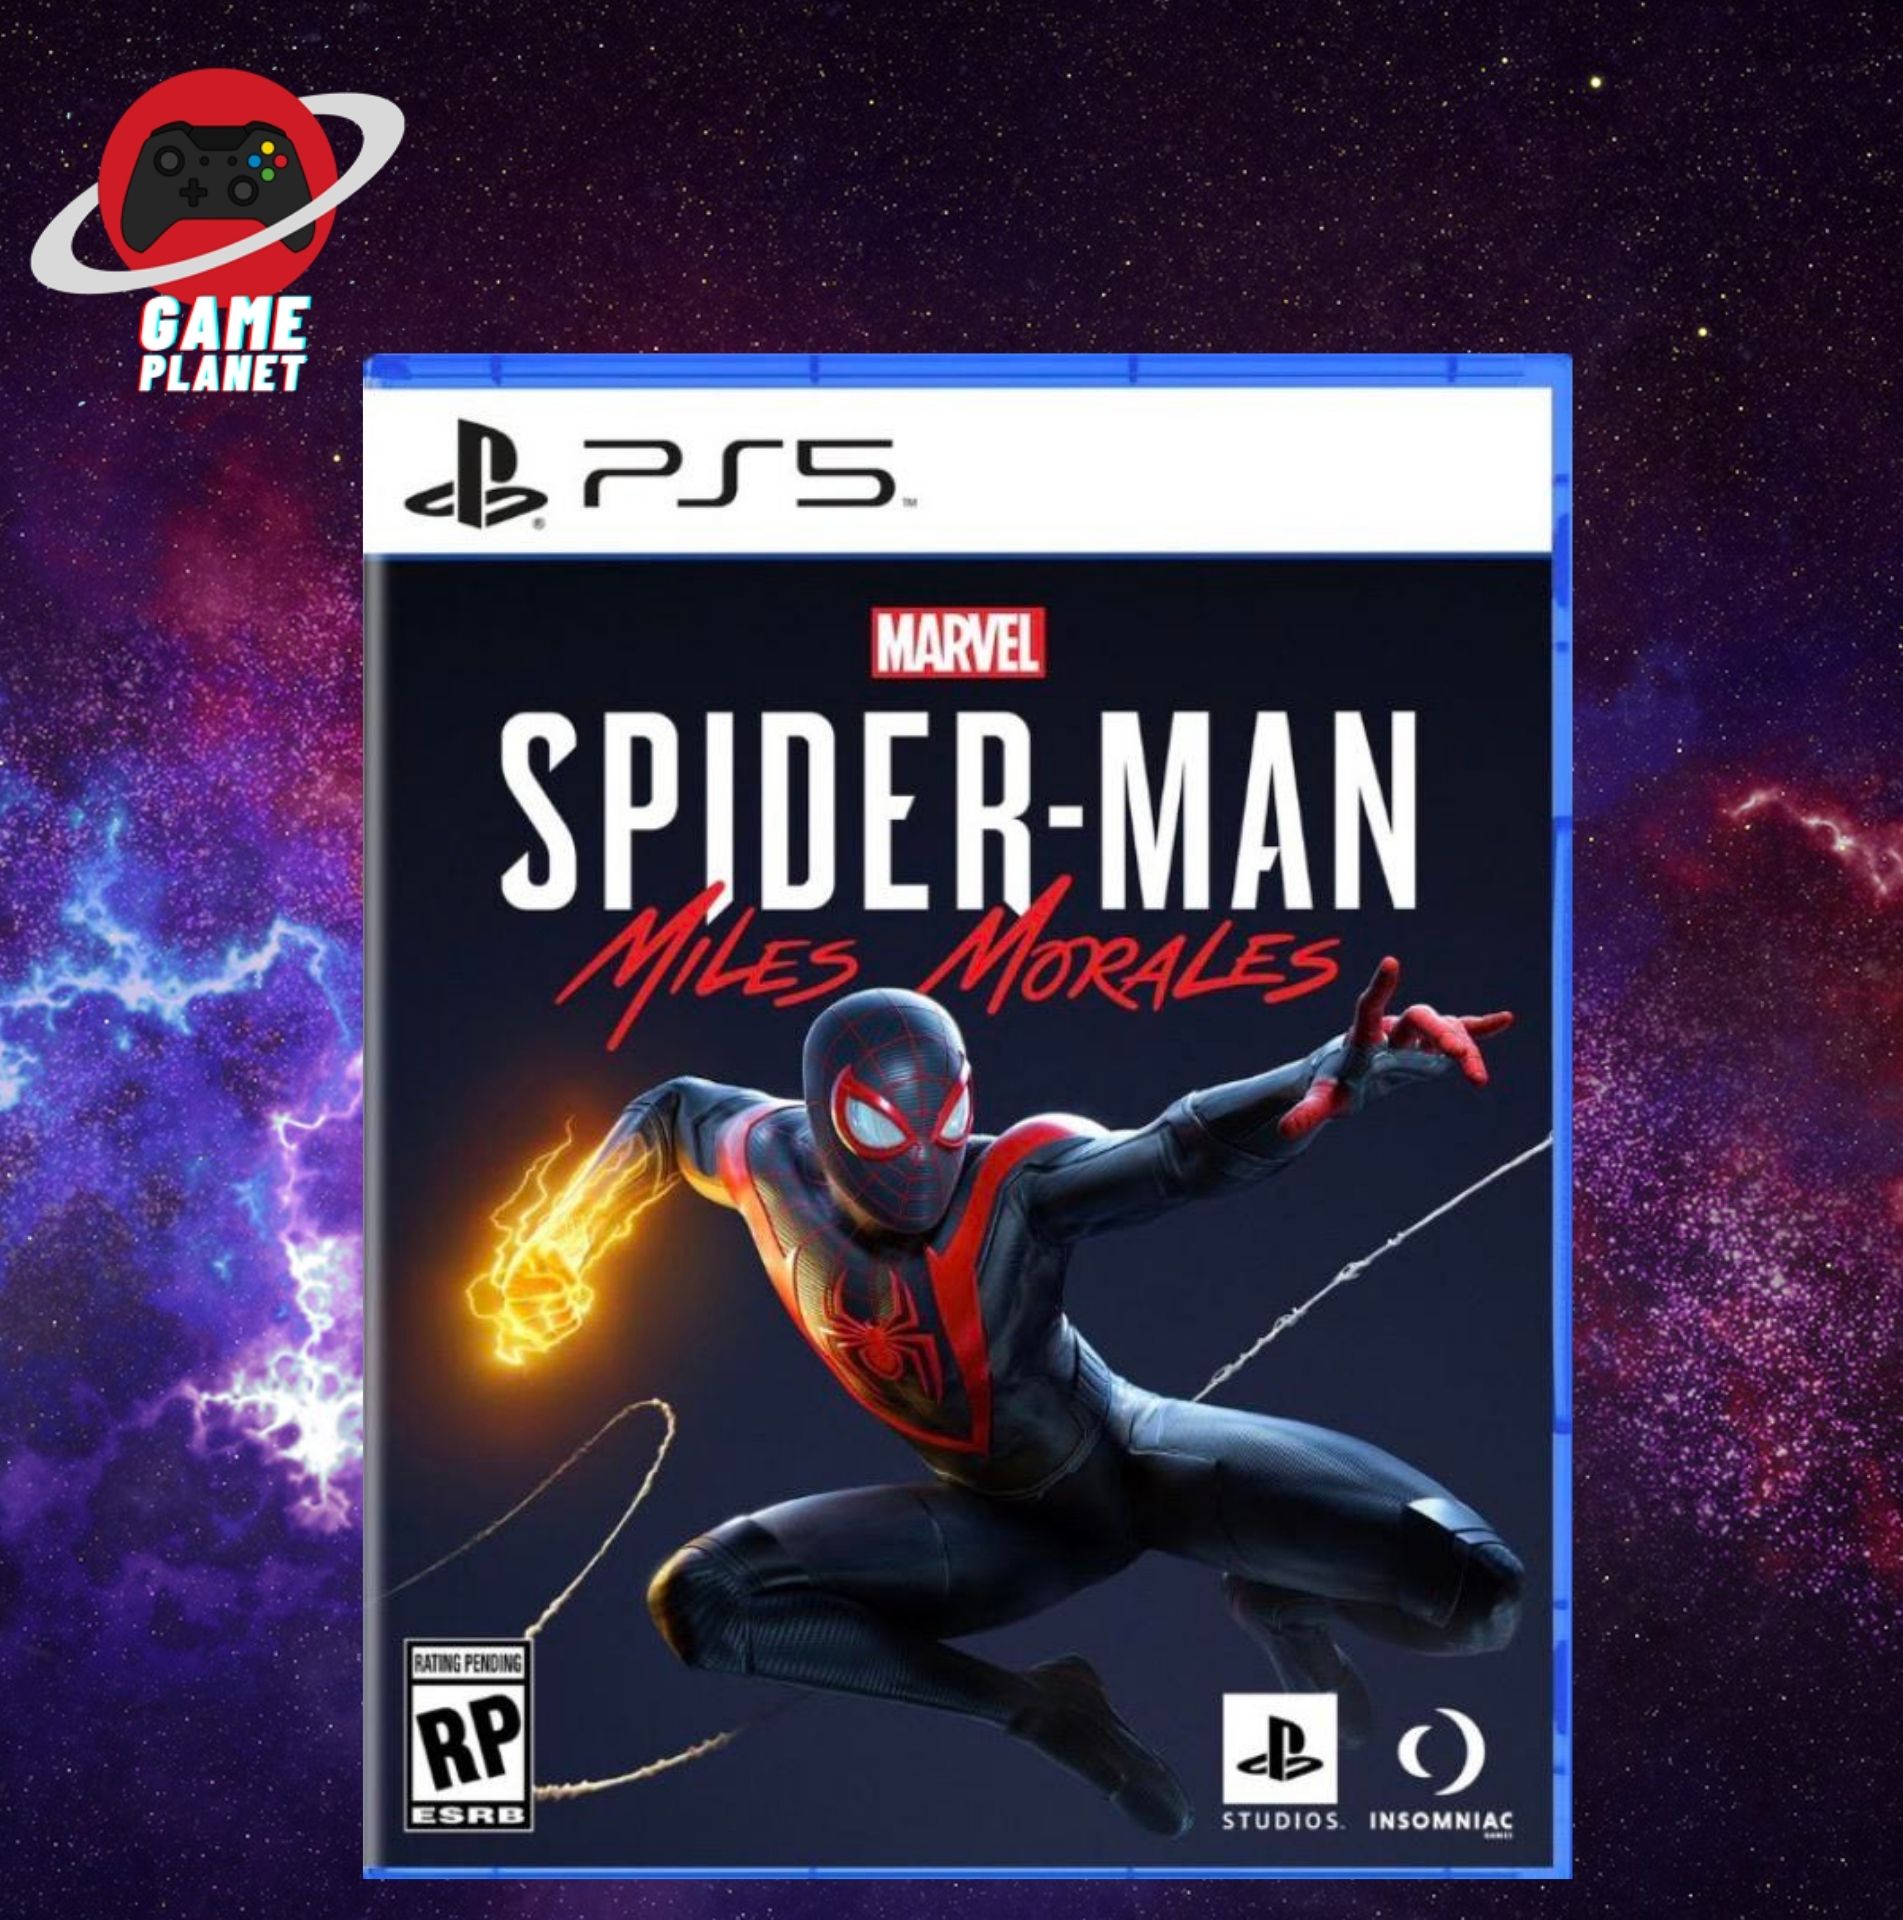 spiderman ps4 gameplanet